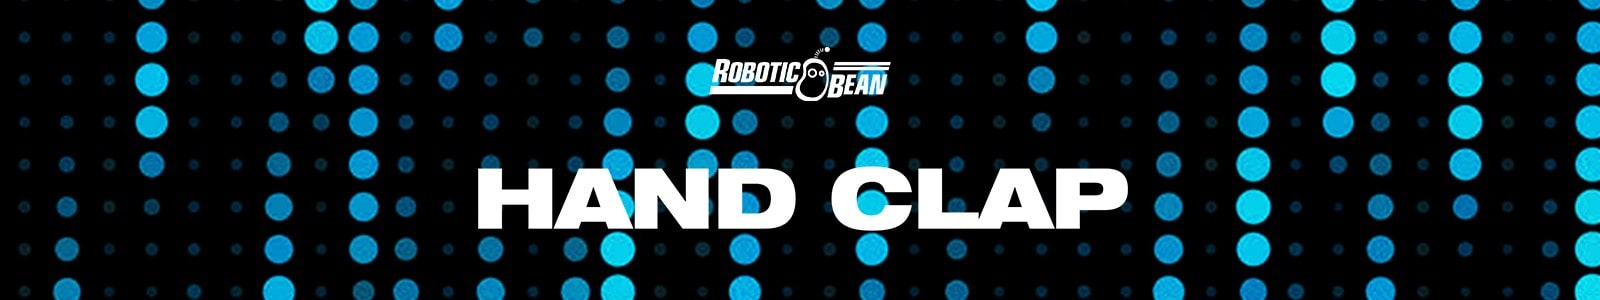 Robotic Bean Hand Clap Studio